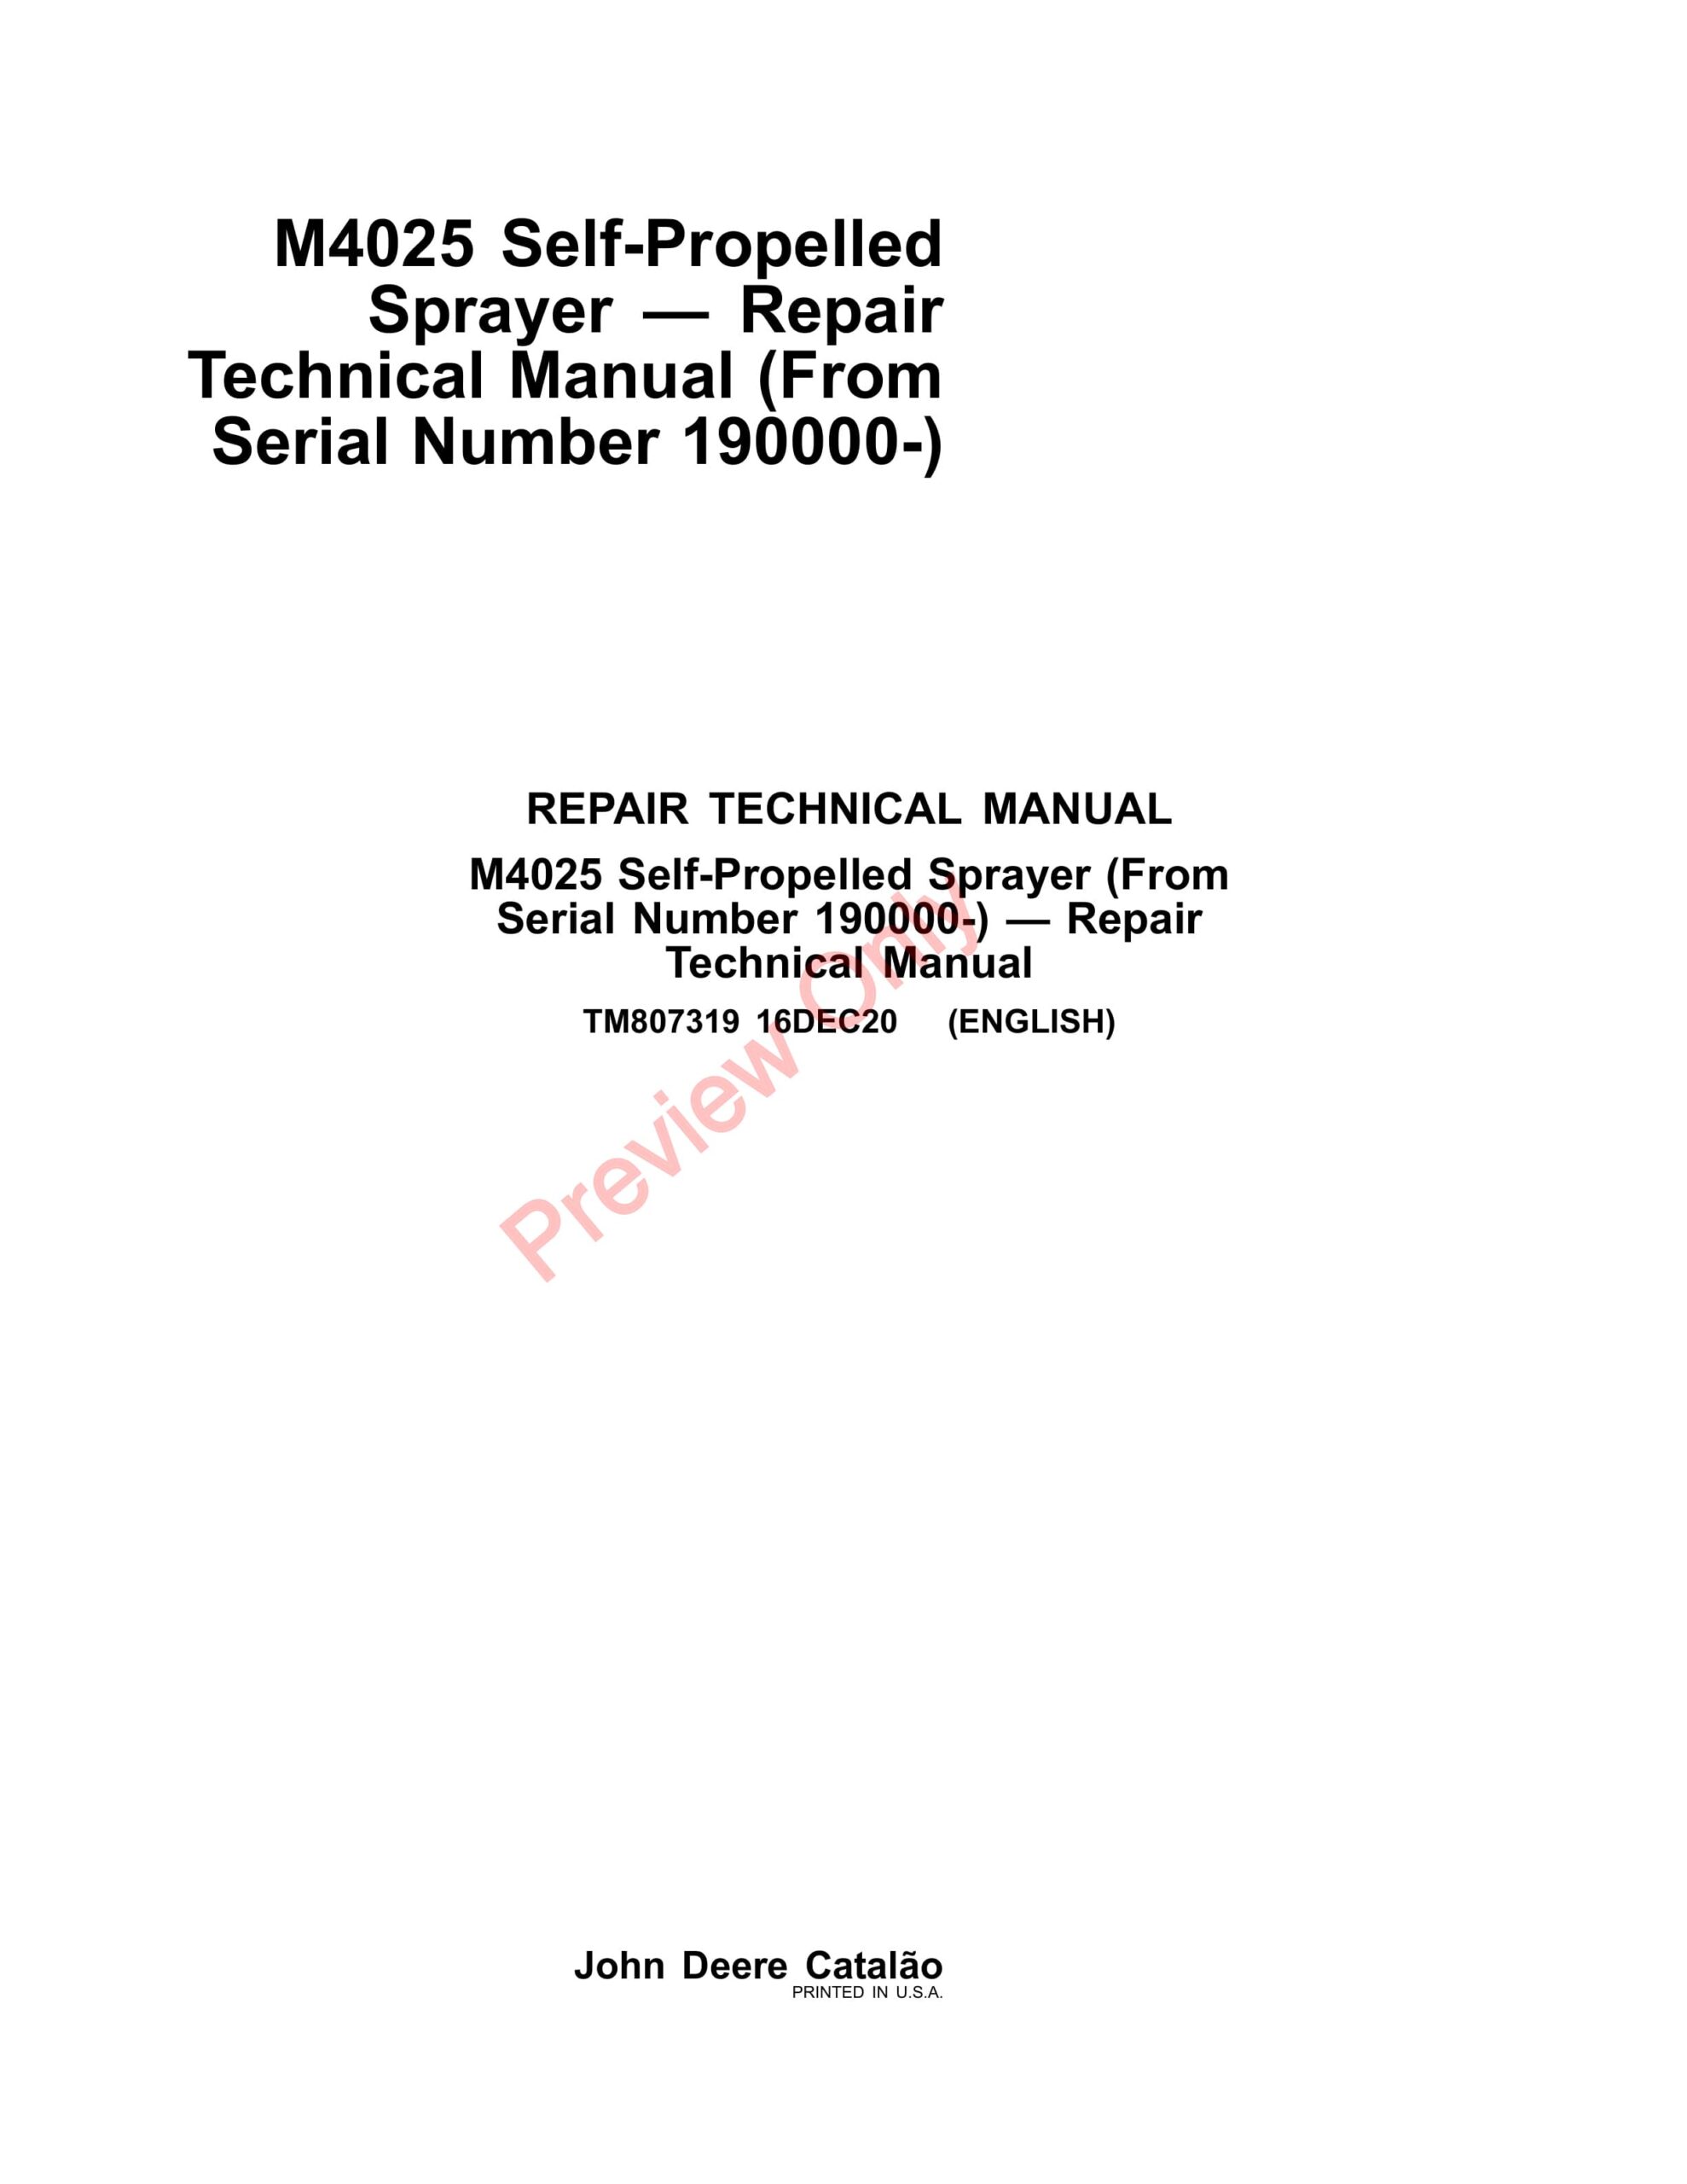 John Deere M4025 Self-Propelled Sprayer Repair Technical Manual TM807319 16DEC20-1